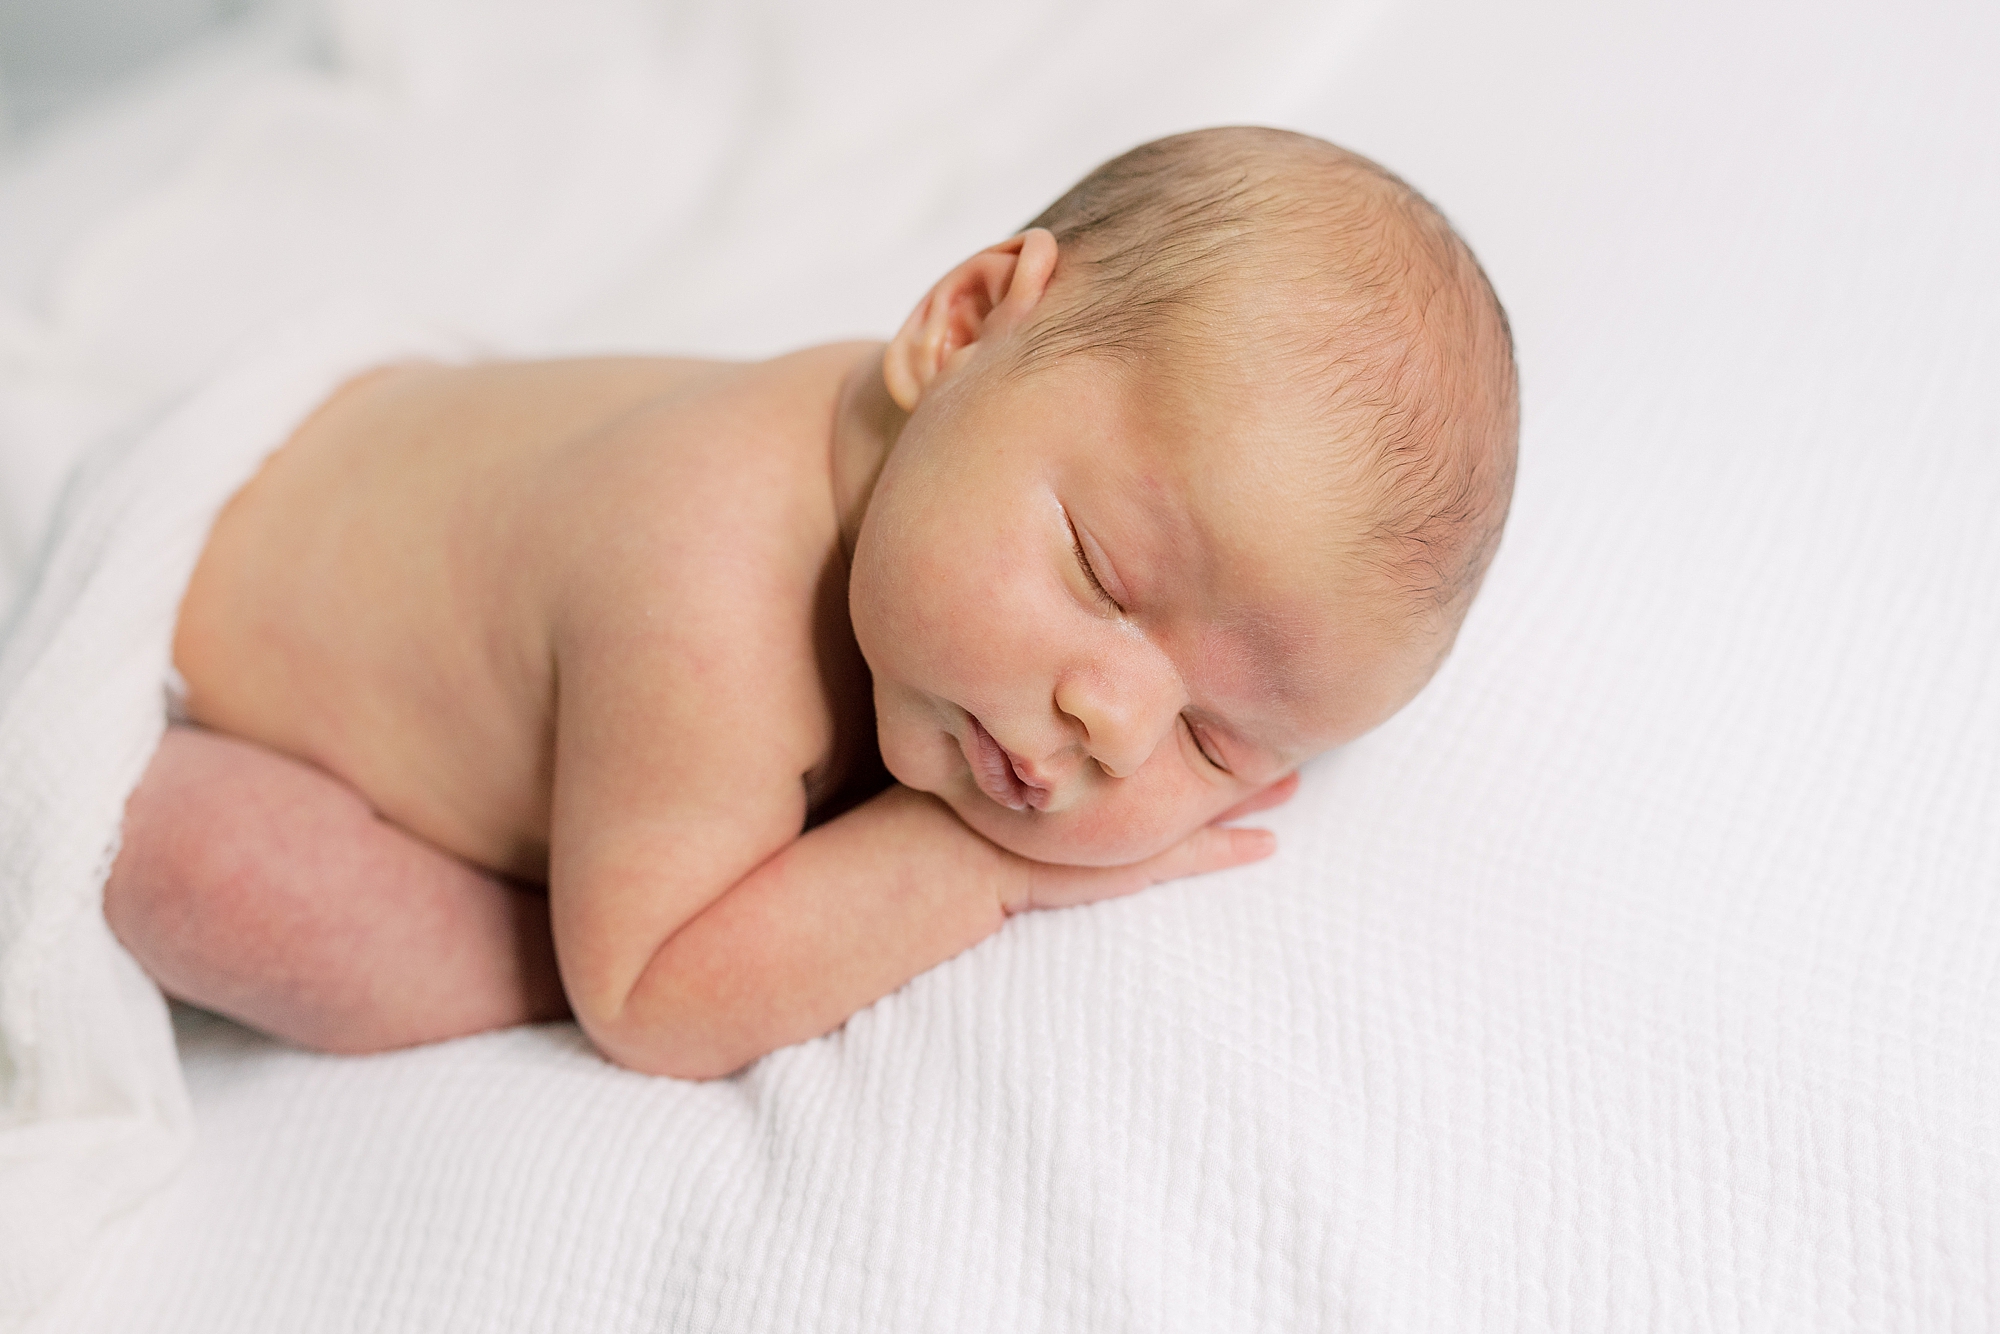 baby boy sleeps on white blanket during newborn portraits at home 